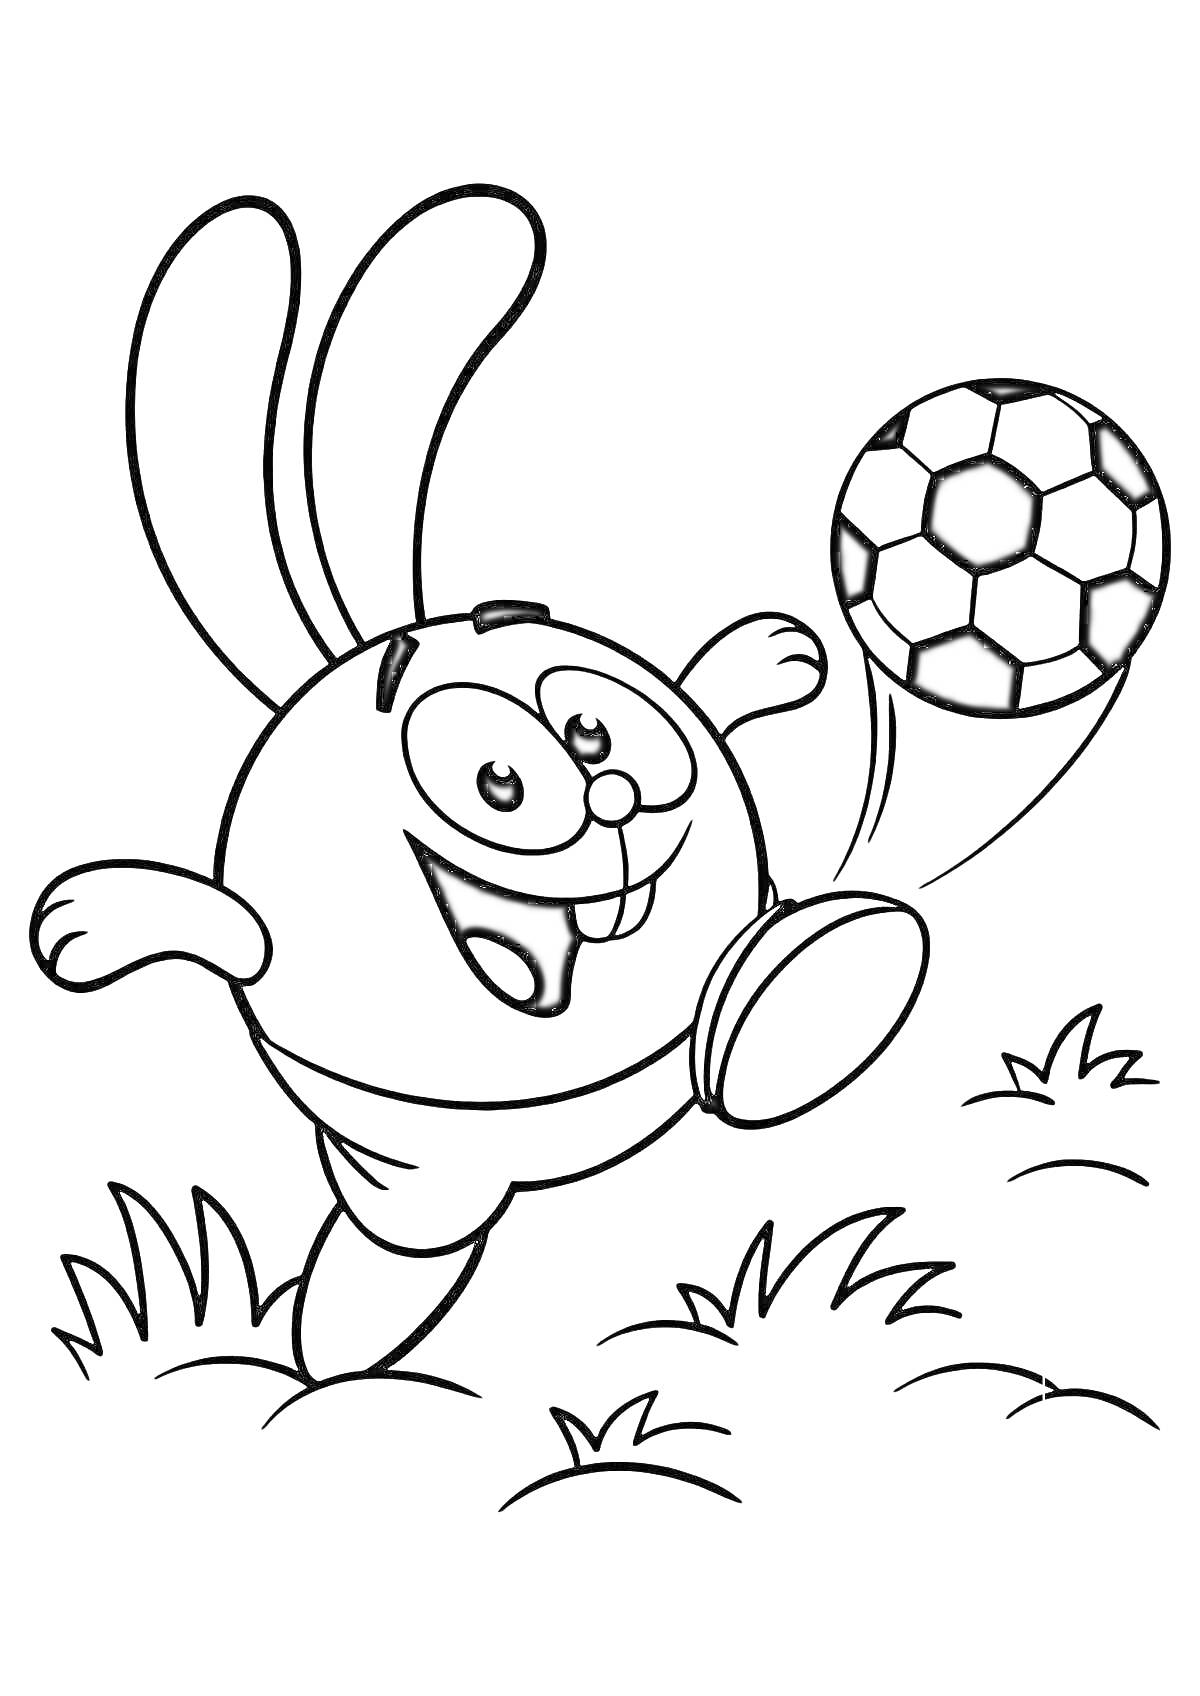 Раскраска Крош играет в футбол на траве